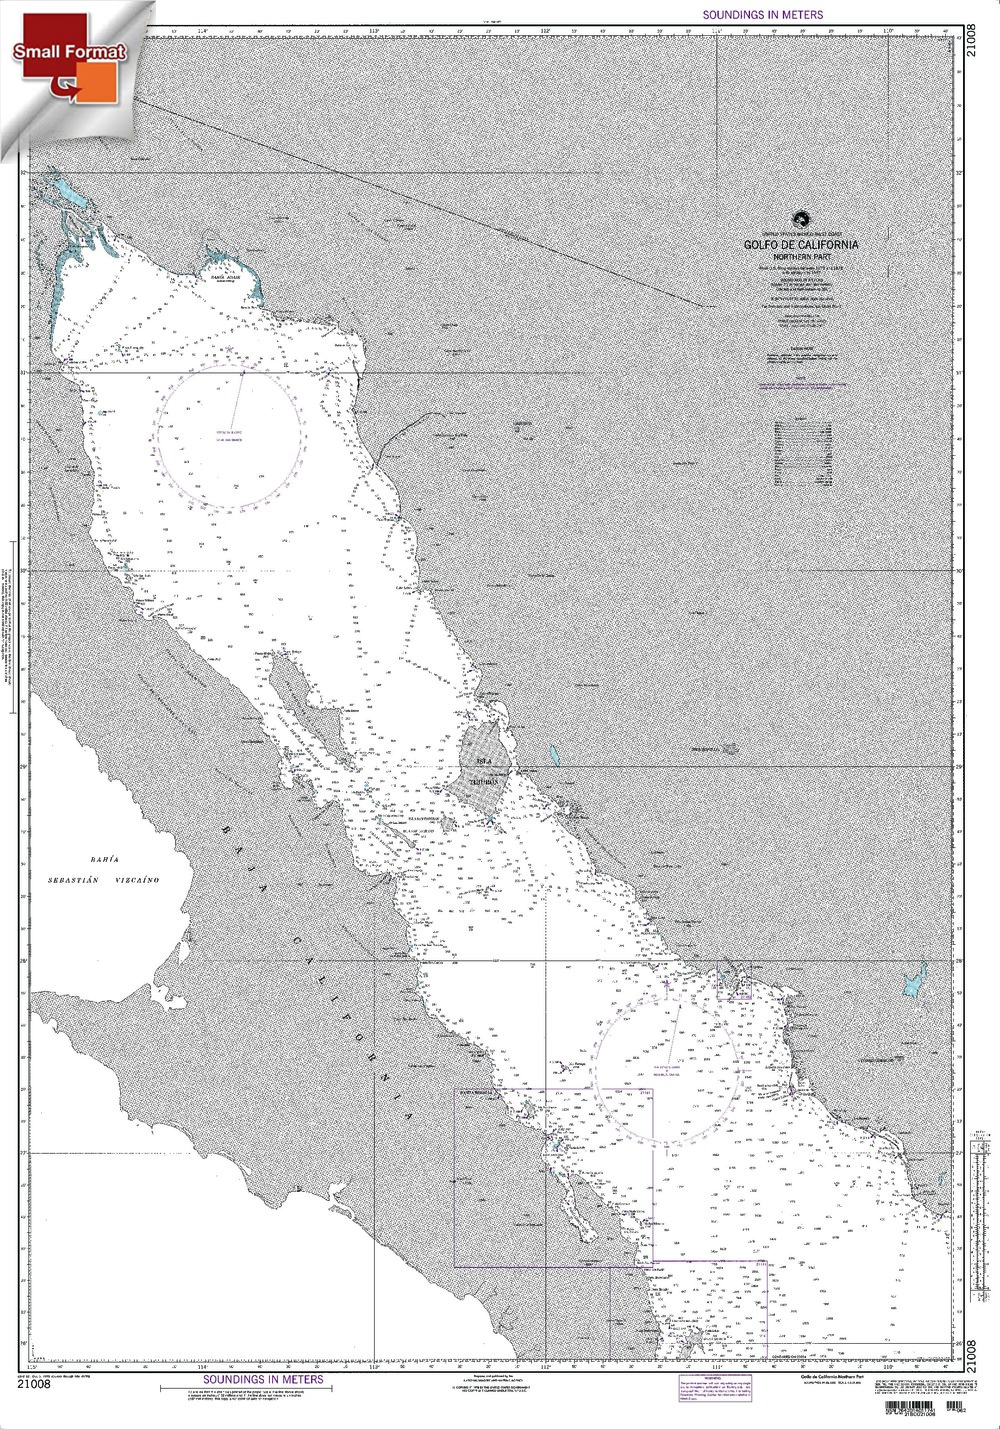 NGA Charts: Region 1 - North America, NGA Chart 21008: Golfo De California Northern Part, Approx. Size 21" x 29" (SMALL FORMAT WATERPROOF)